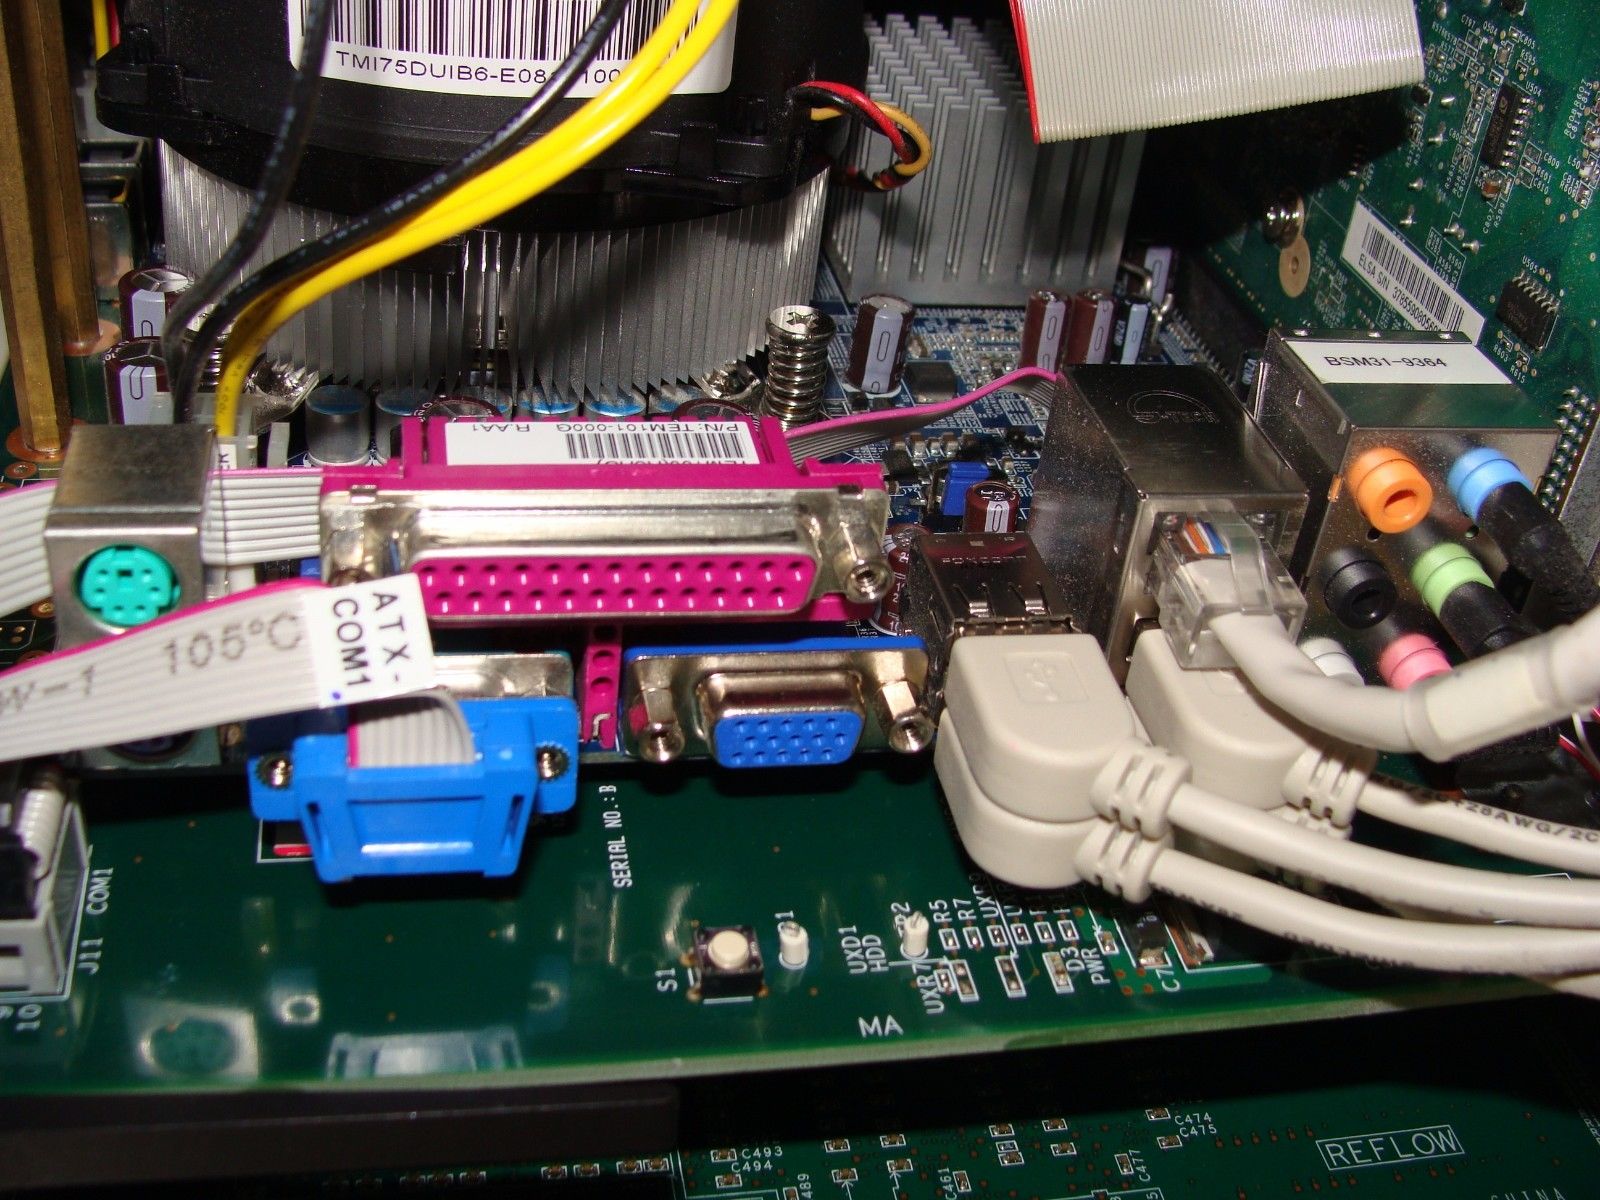 PM30-32744 YWP4774 TOSHIBA APLIO XG SSA-790A ULTRASOUND CPU MAIN BOARD DIAGNOSTIC ULTRASOUND MACHINES FOR SALE